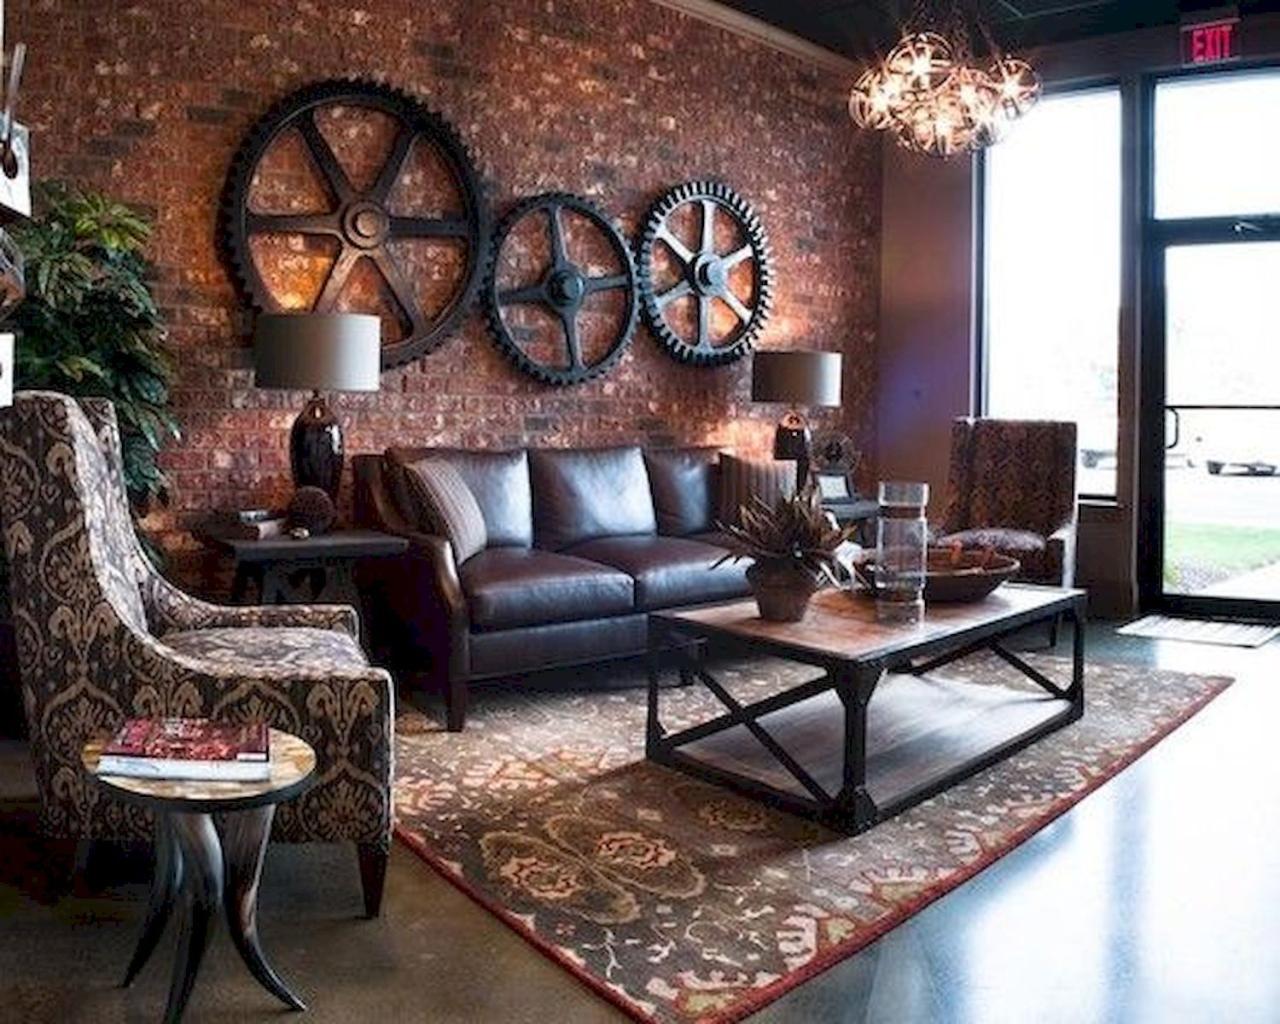 Living room deco furniture elegant inspired decoration royal sofa interior classic house carpet glamorous green gotohomerepair chairs